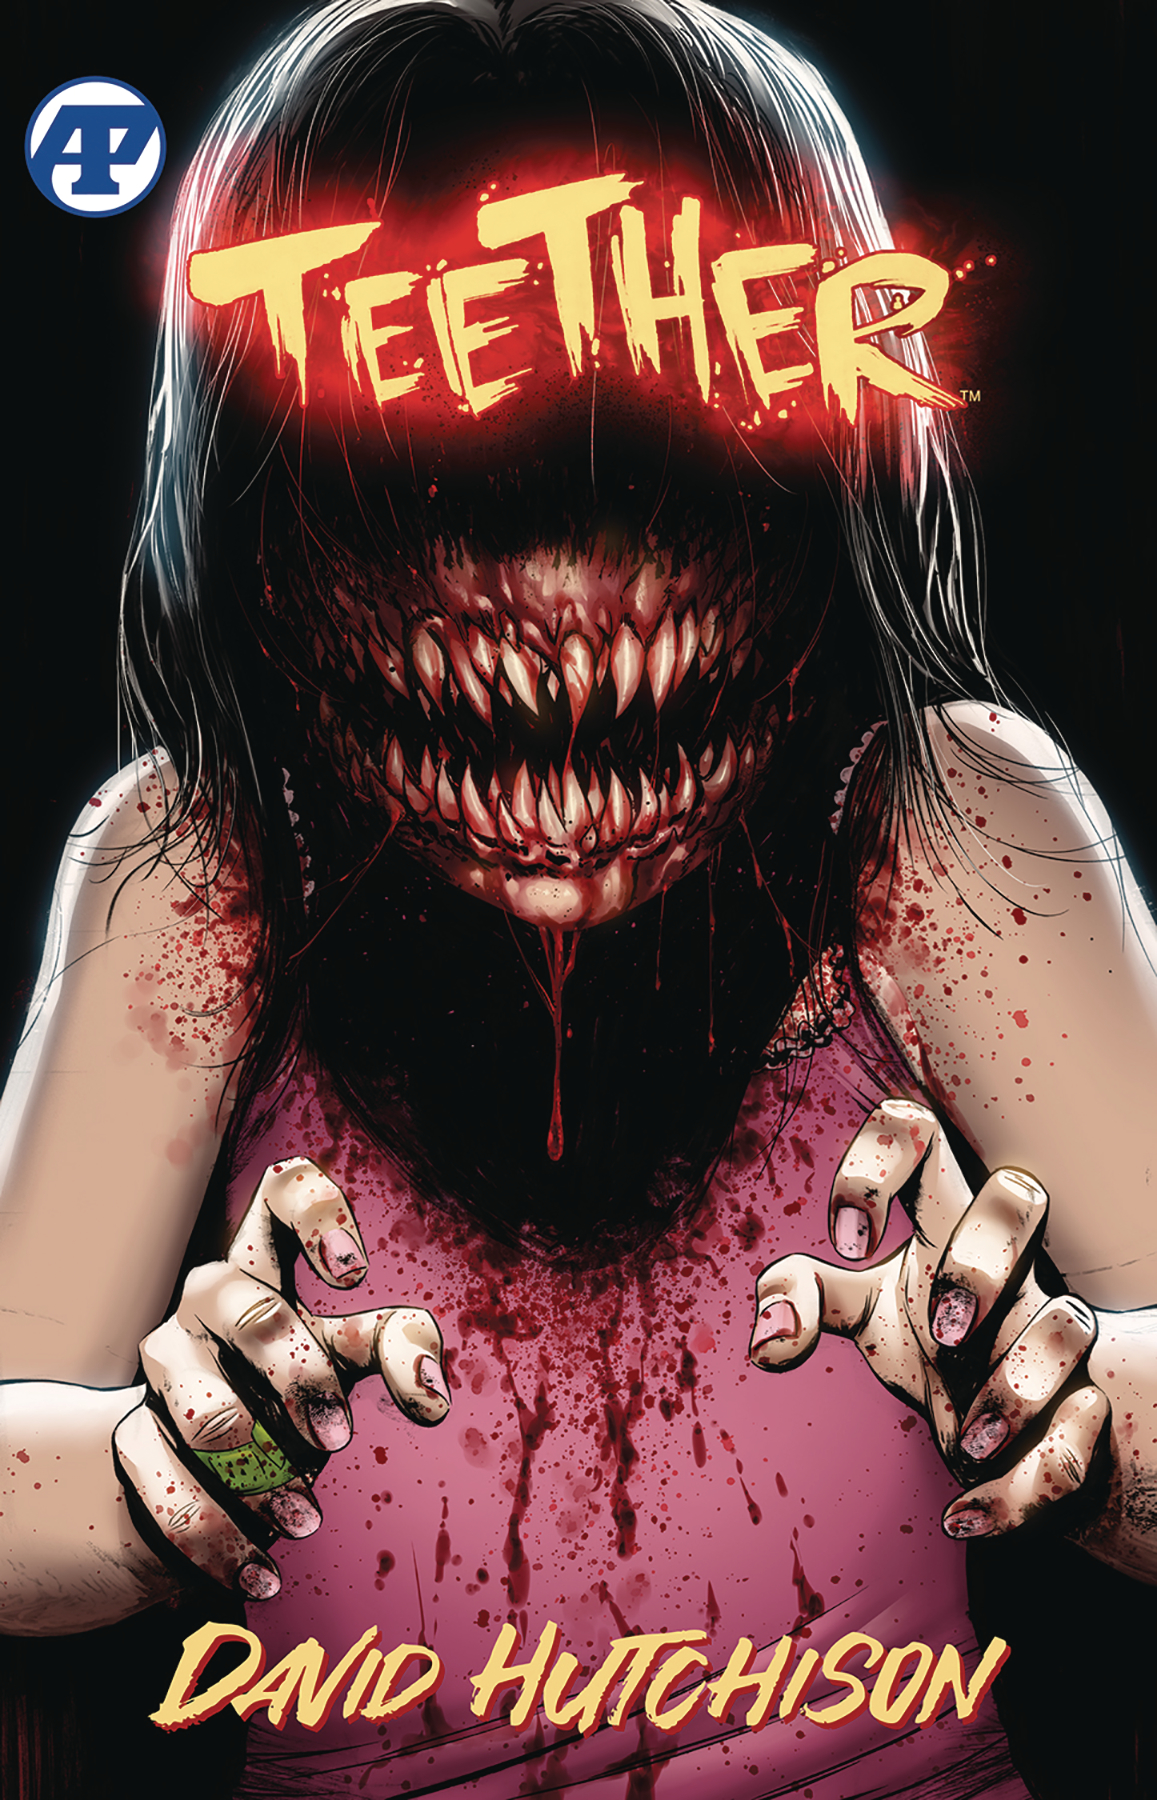 Teether Graphic Novel Big Bite